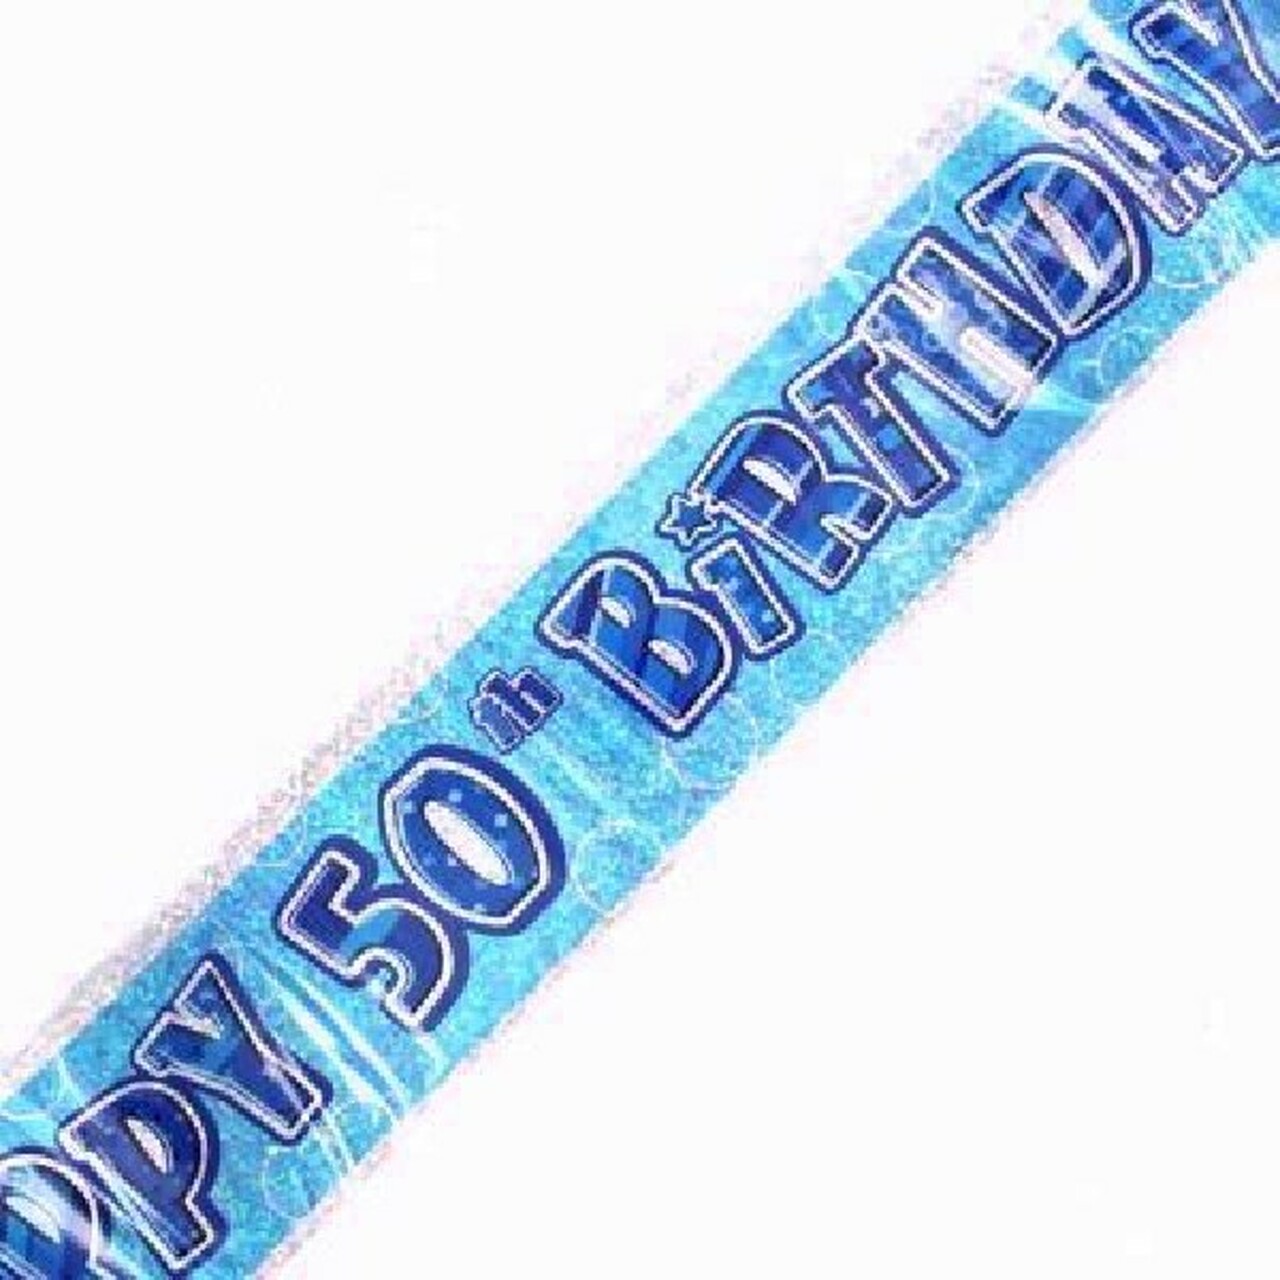 Birthday Glitz Strip Banner - Blue 50th Birthday